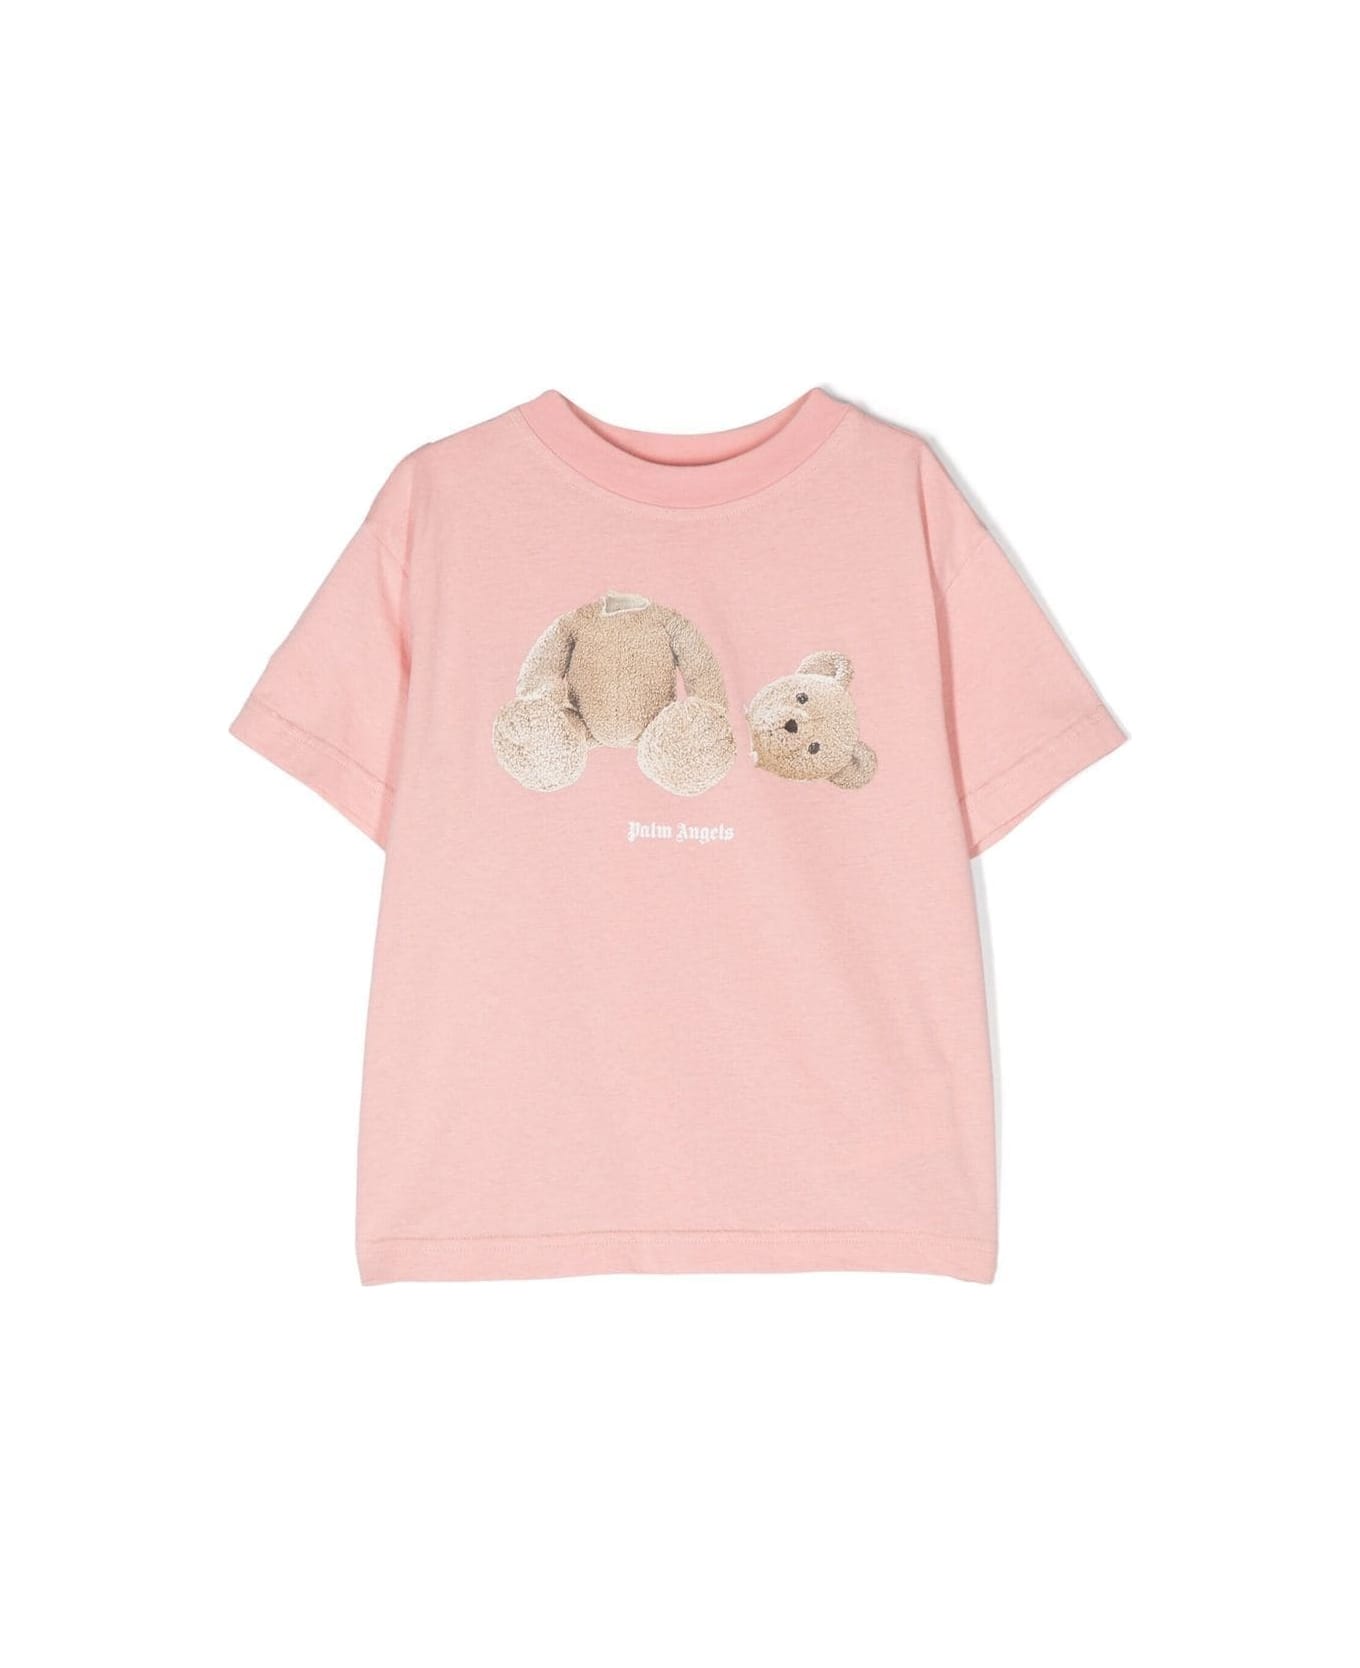 Palm Angels Pink Bear T-shirt - Pink